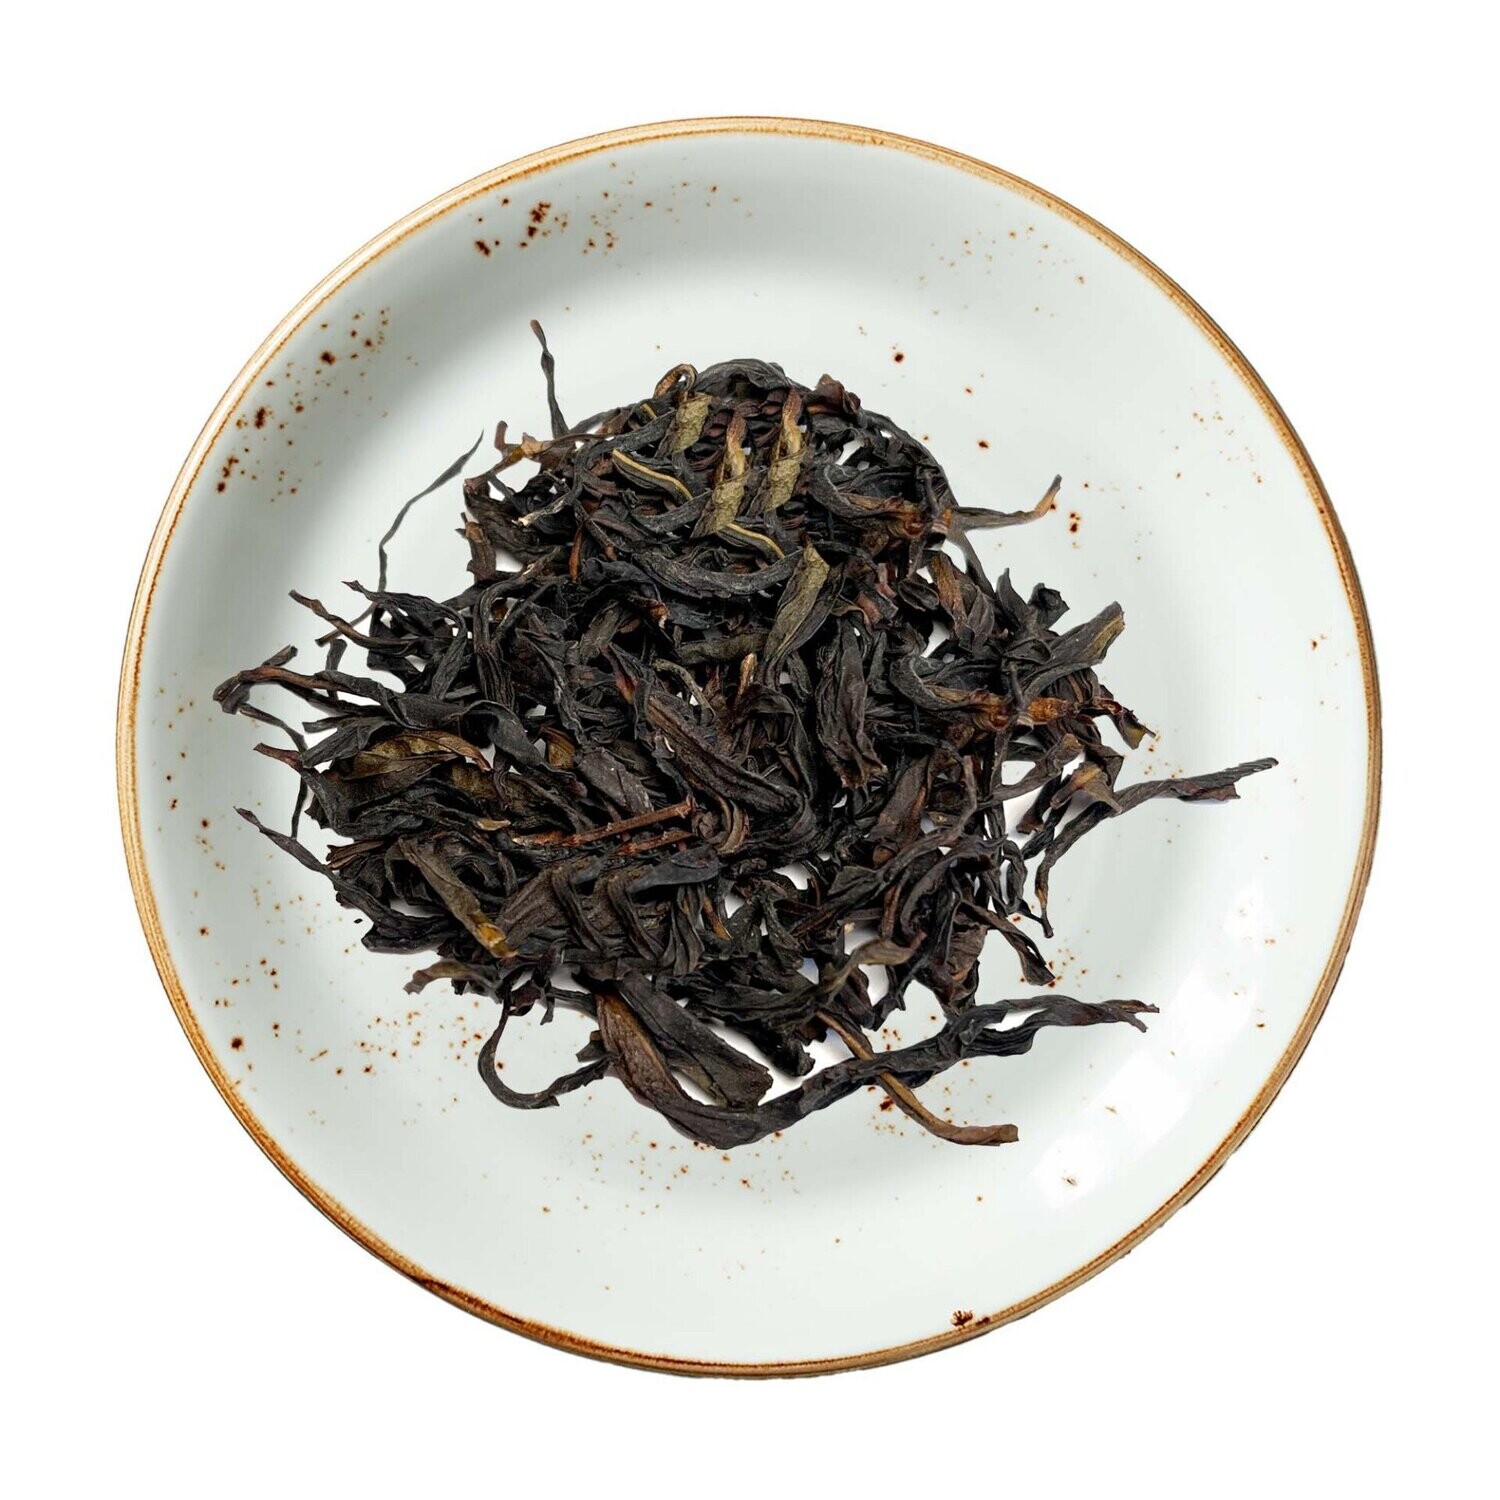 Huang Zhi Xiang (Orange Blossom) Oolong Tea, Size: One Ounce (28 grams)